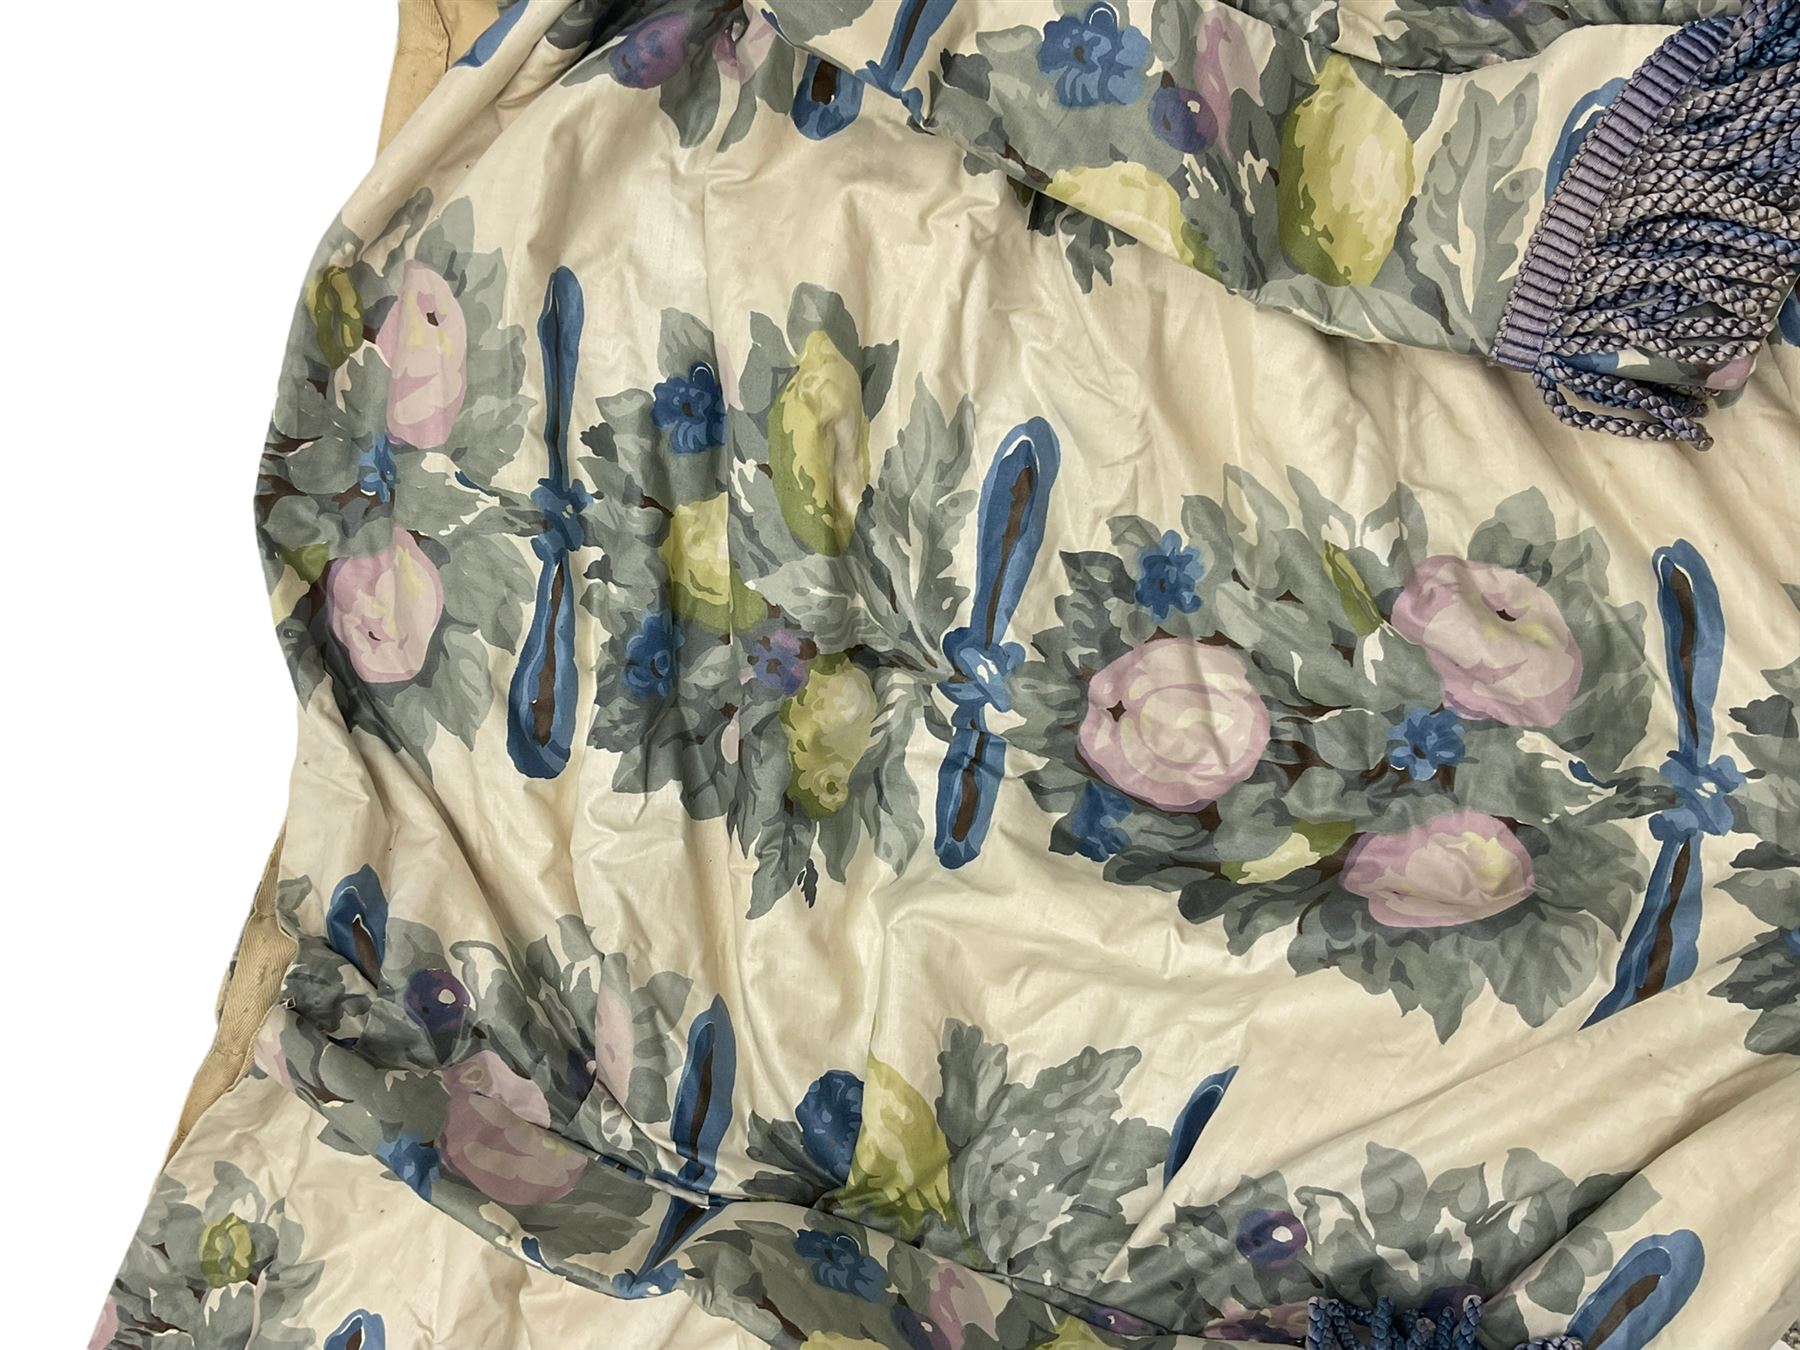 Charles Hammond of Sloane Square London - tasselled silk pelmet - Image 3 of 4